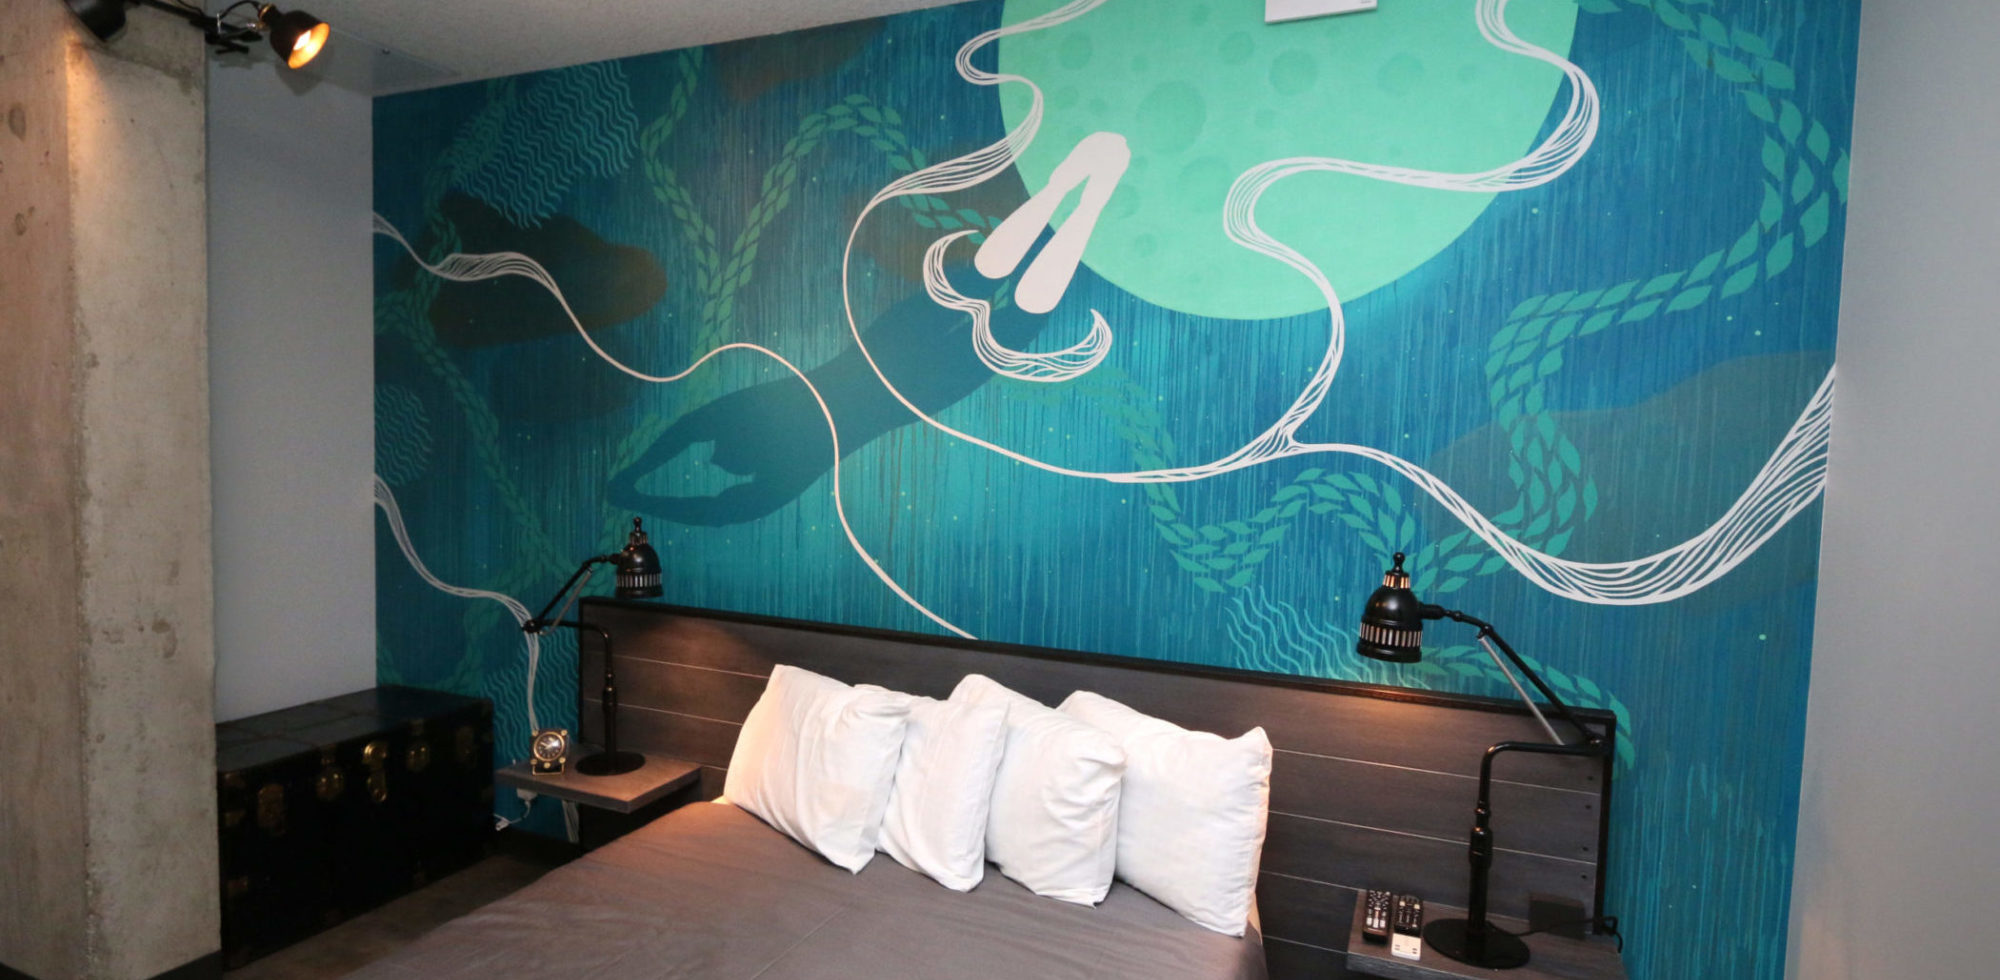 Boutique hotel room designed by Steven Teeuwsen and Kendel Vreeling